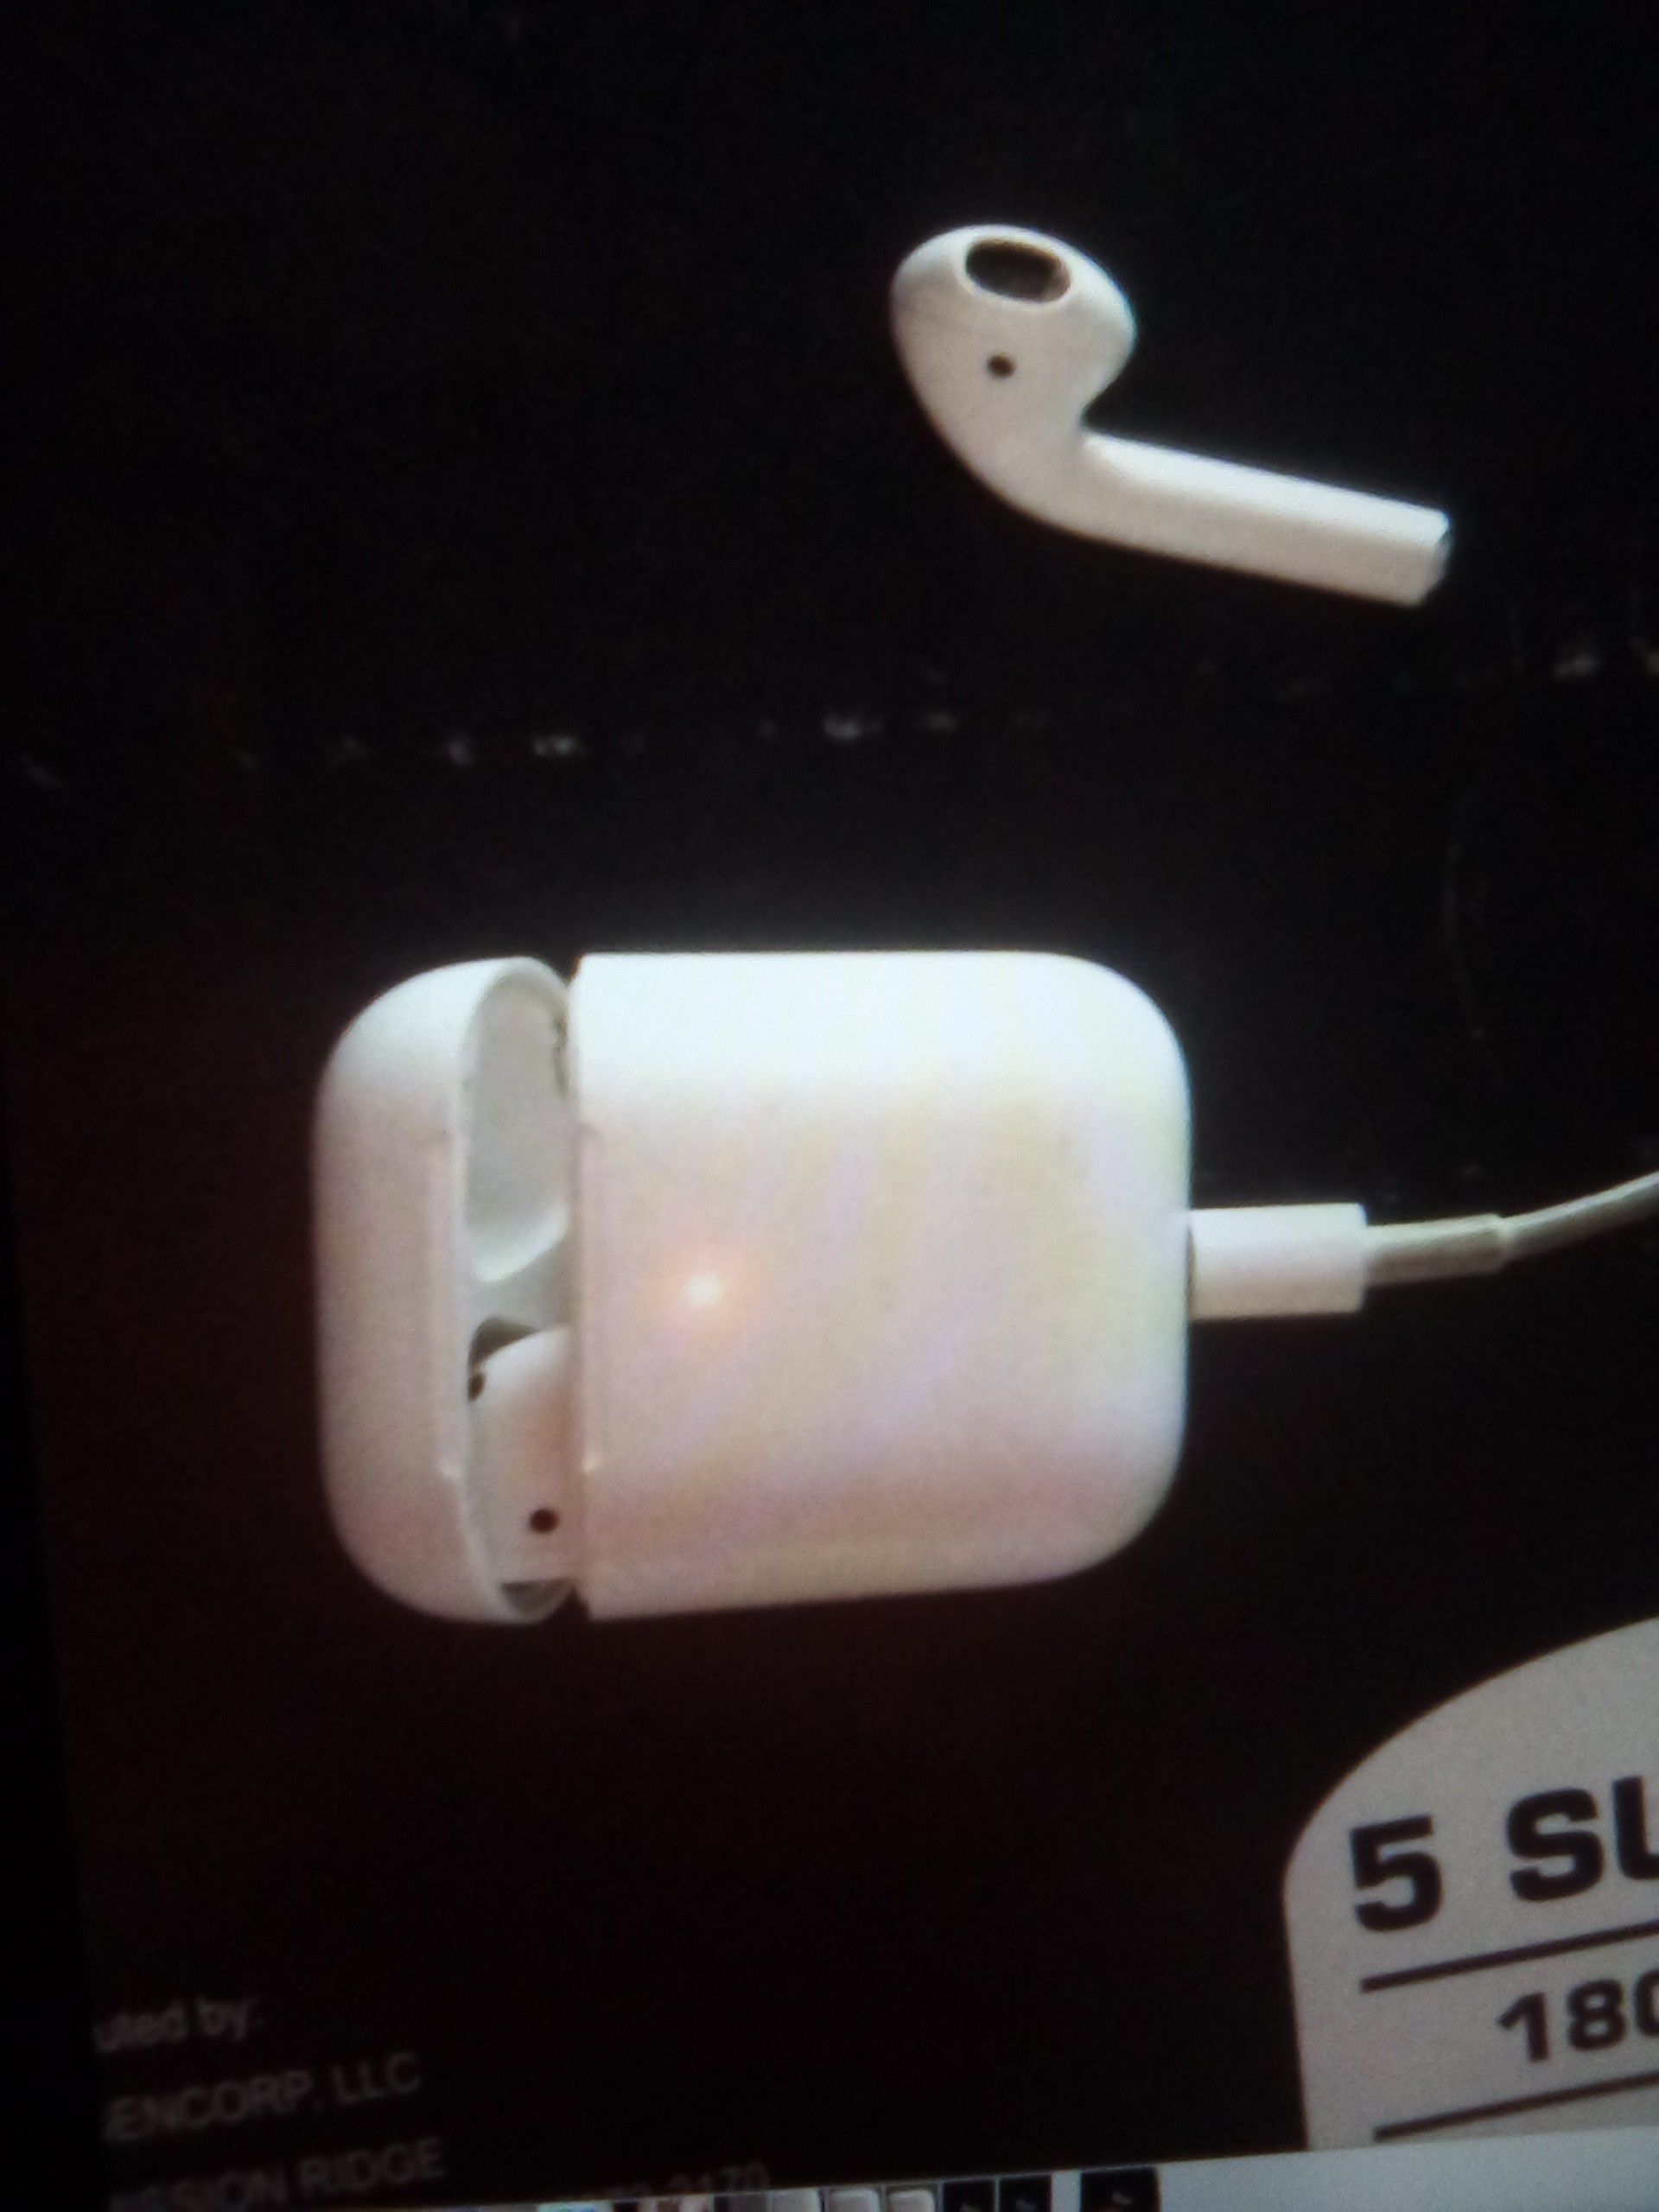 Apple AirPods Headphones $70